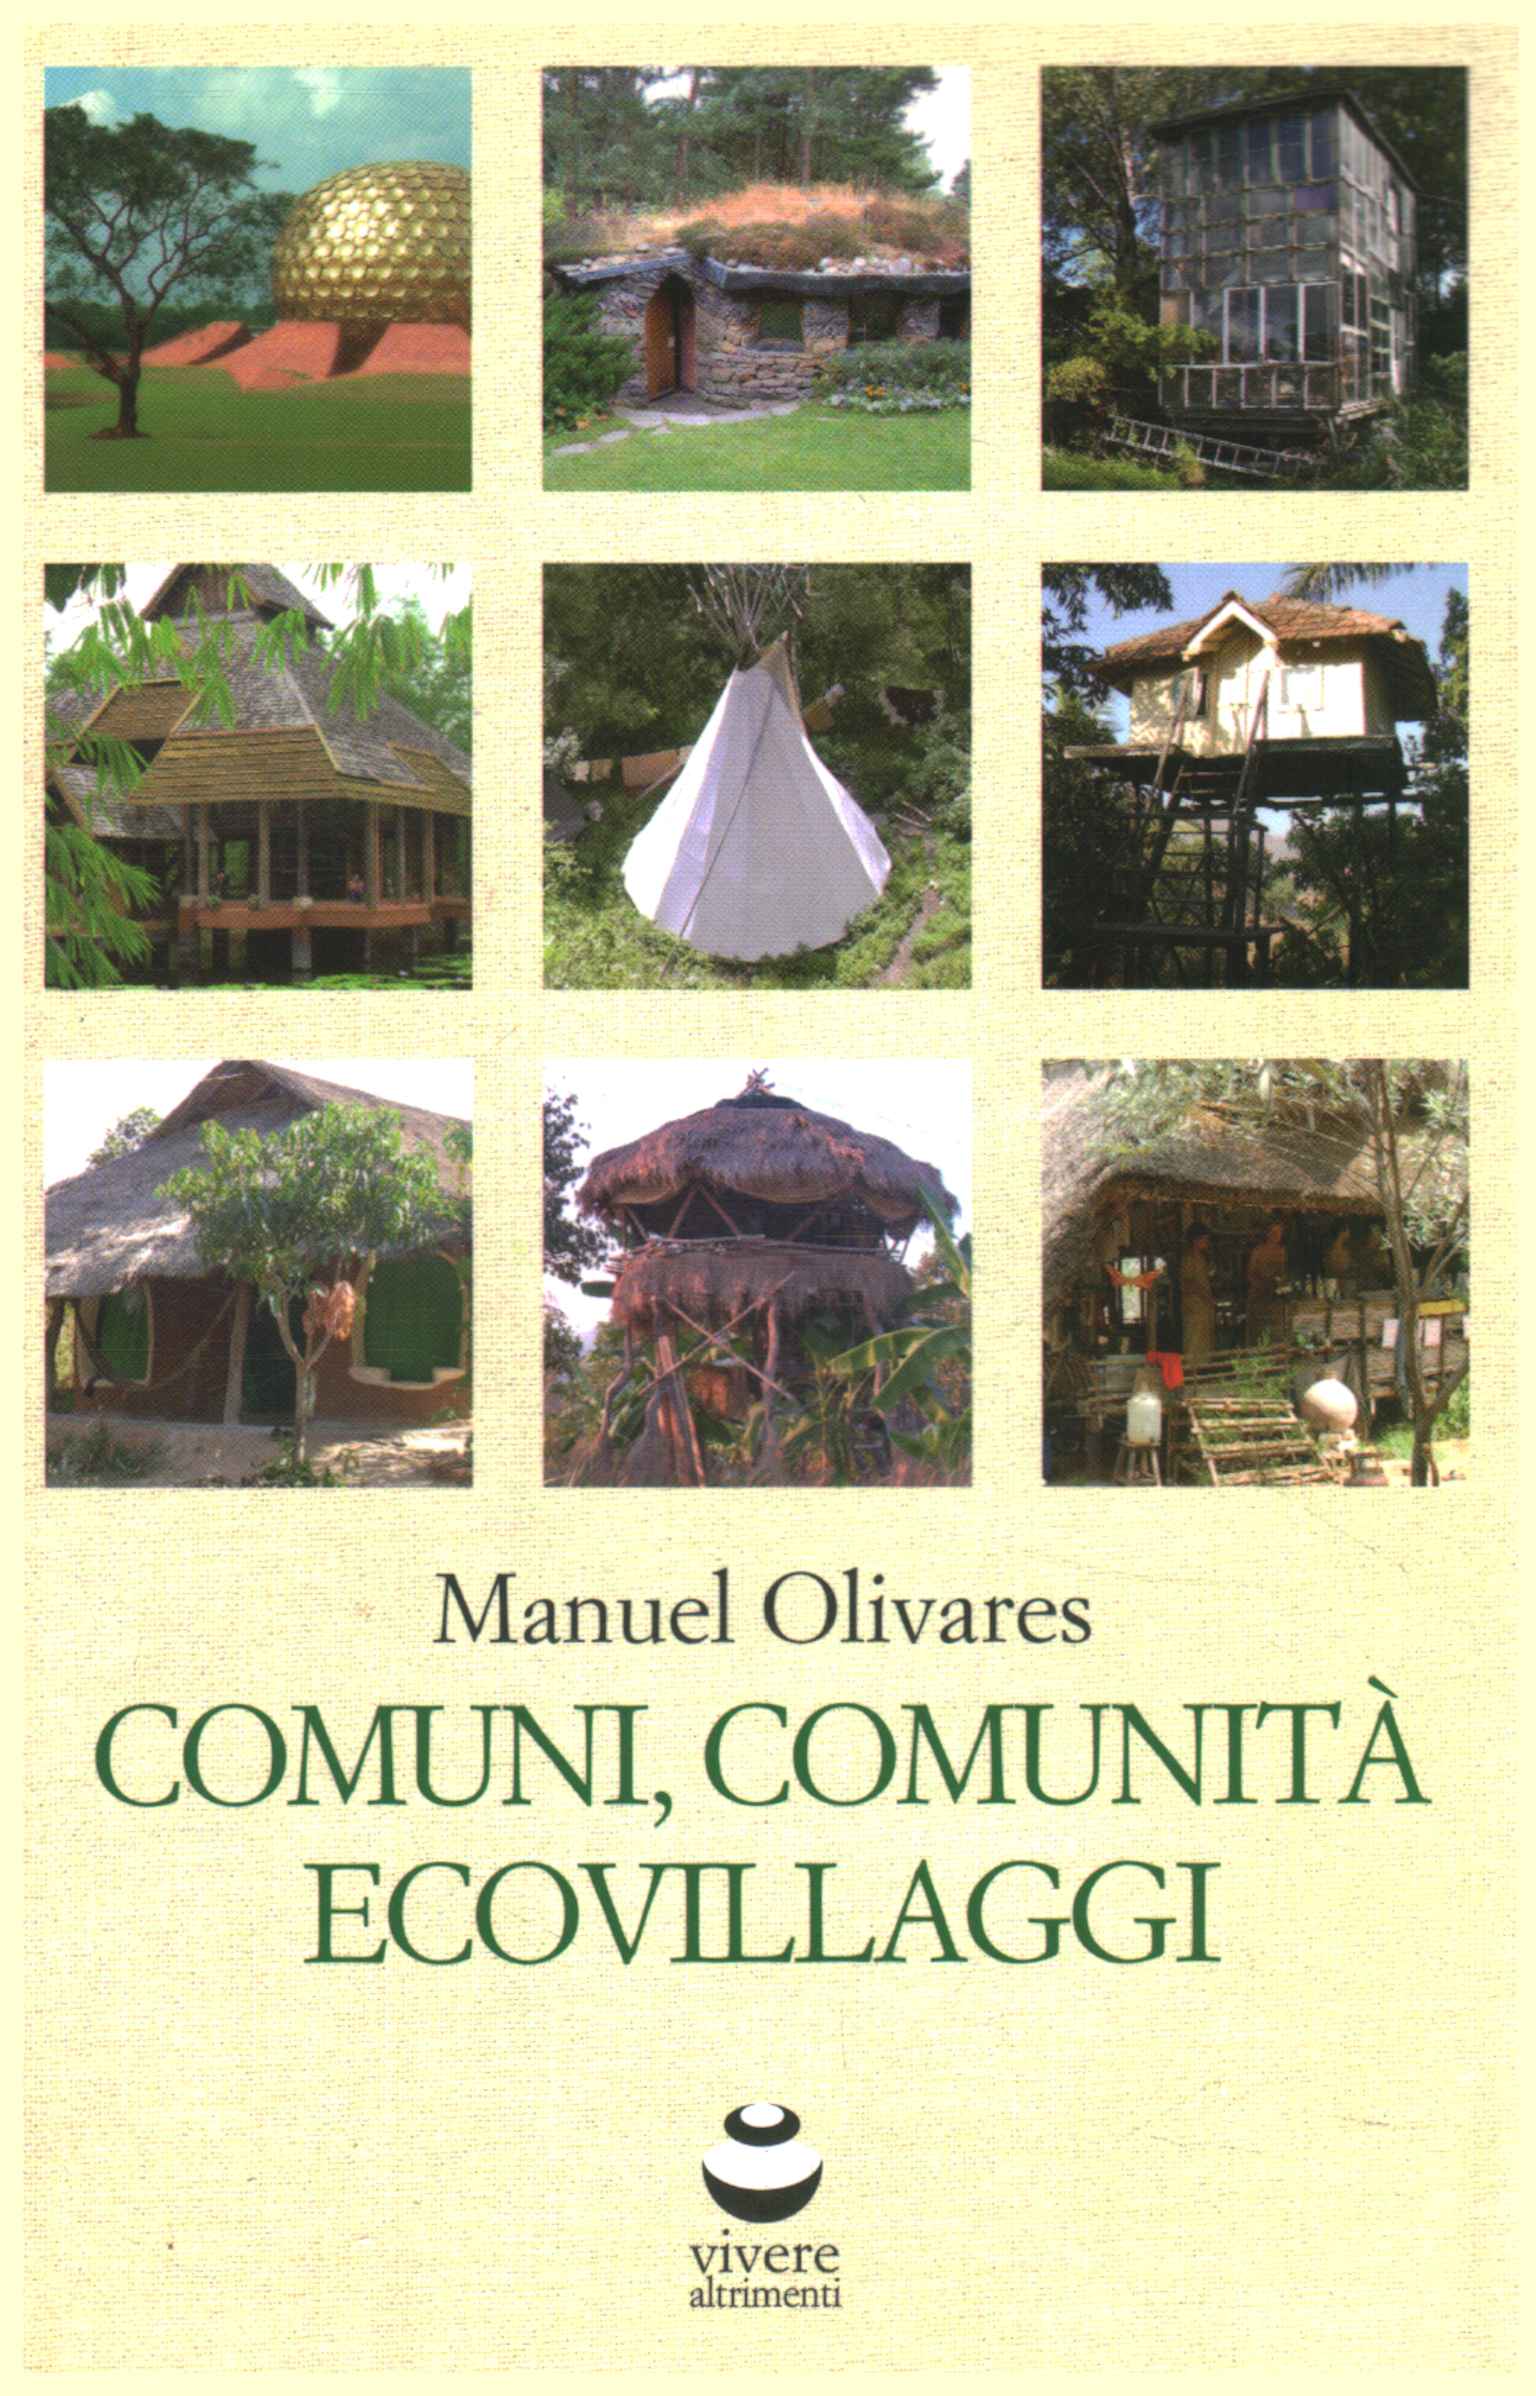 Municipalities, communities and ecovillages